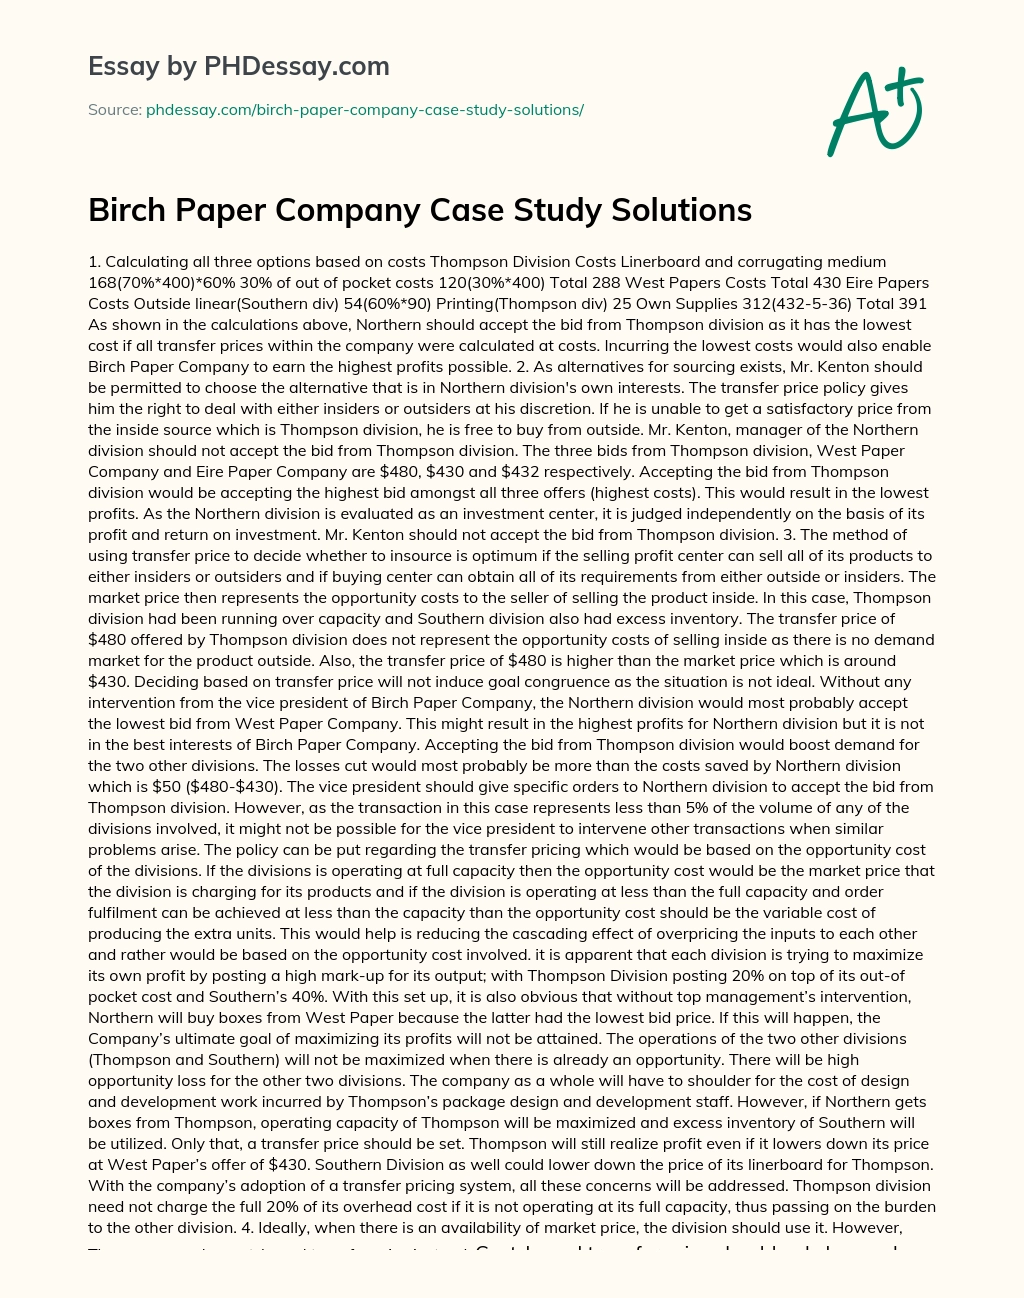 Birch Paper Company Case Study Solutions essay